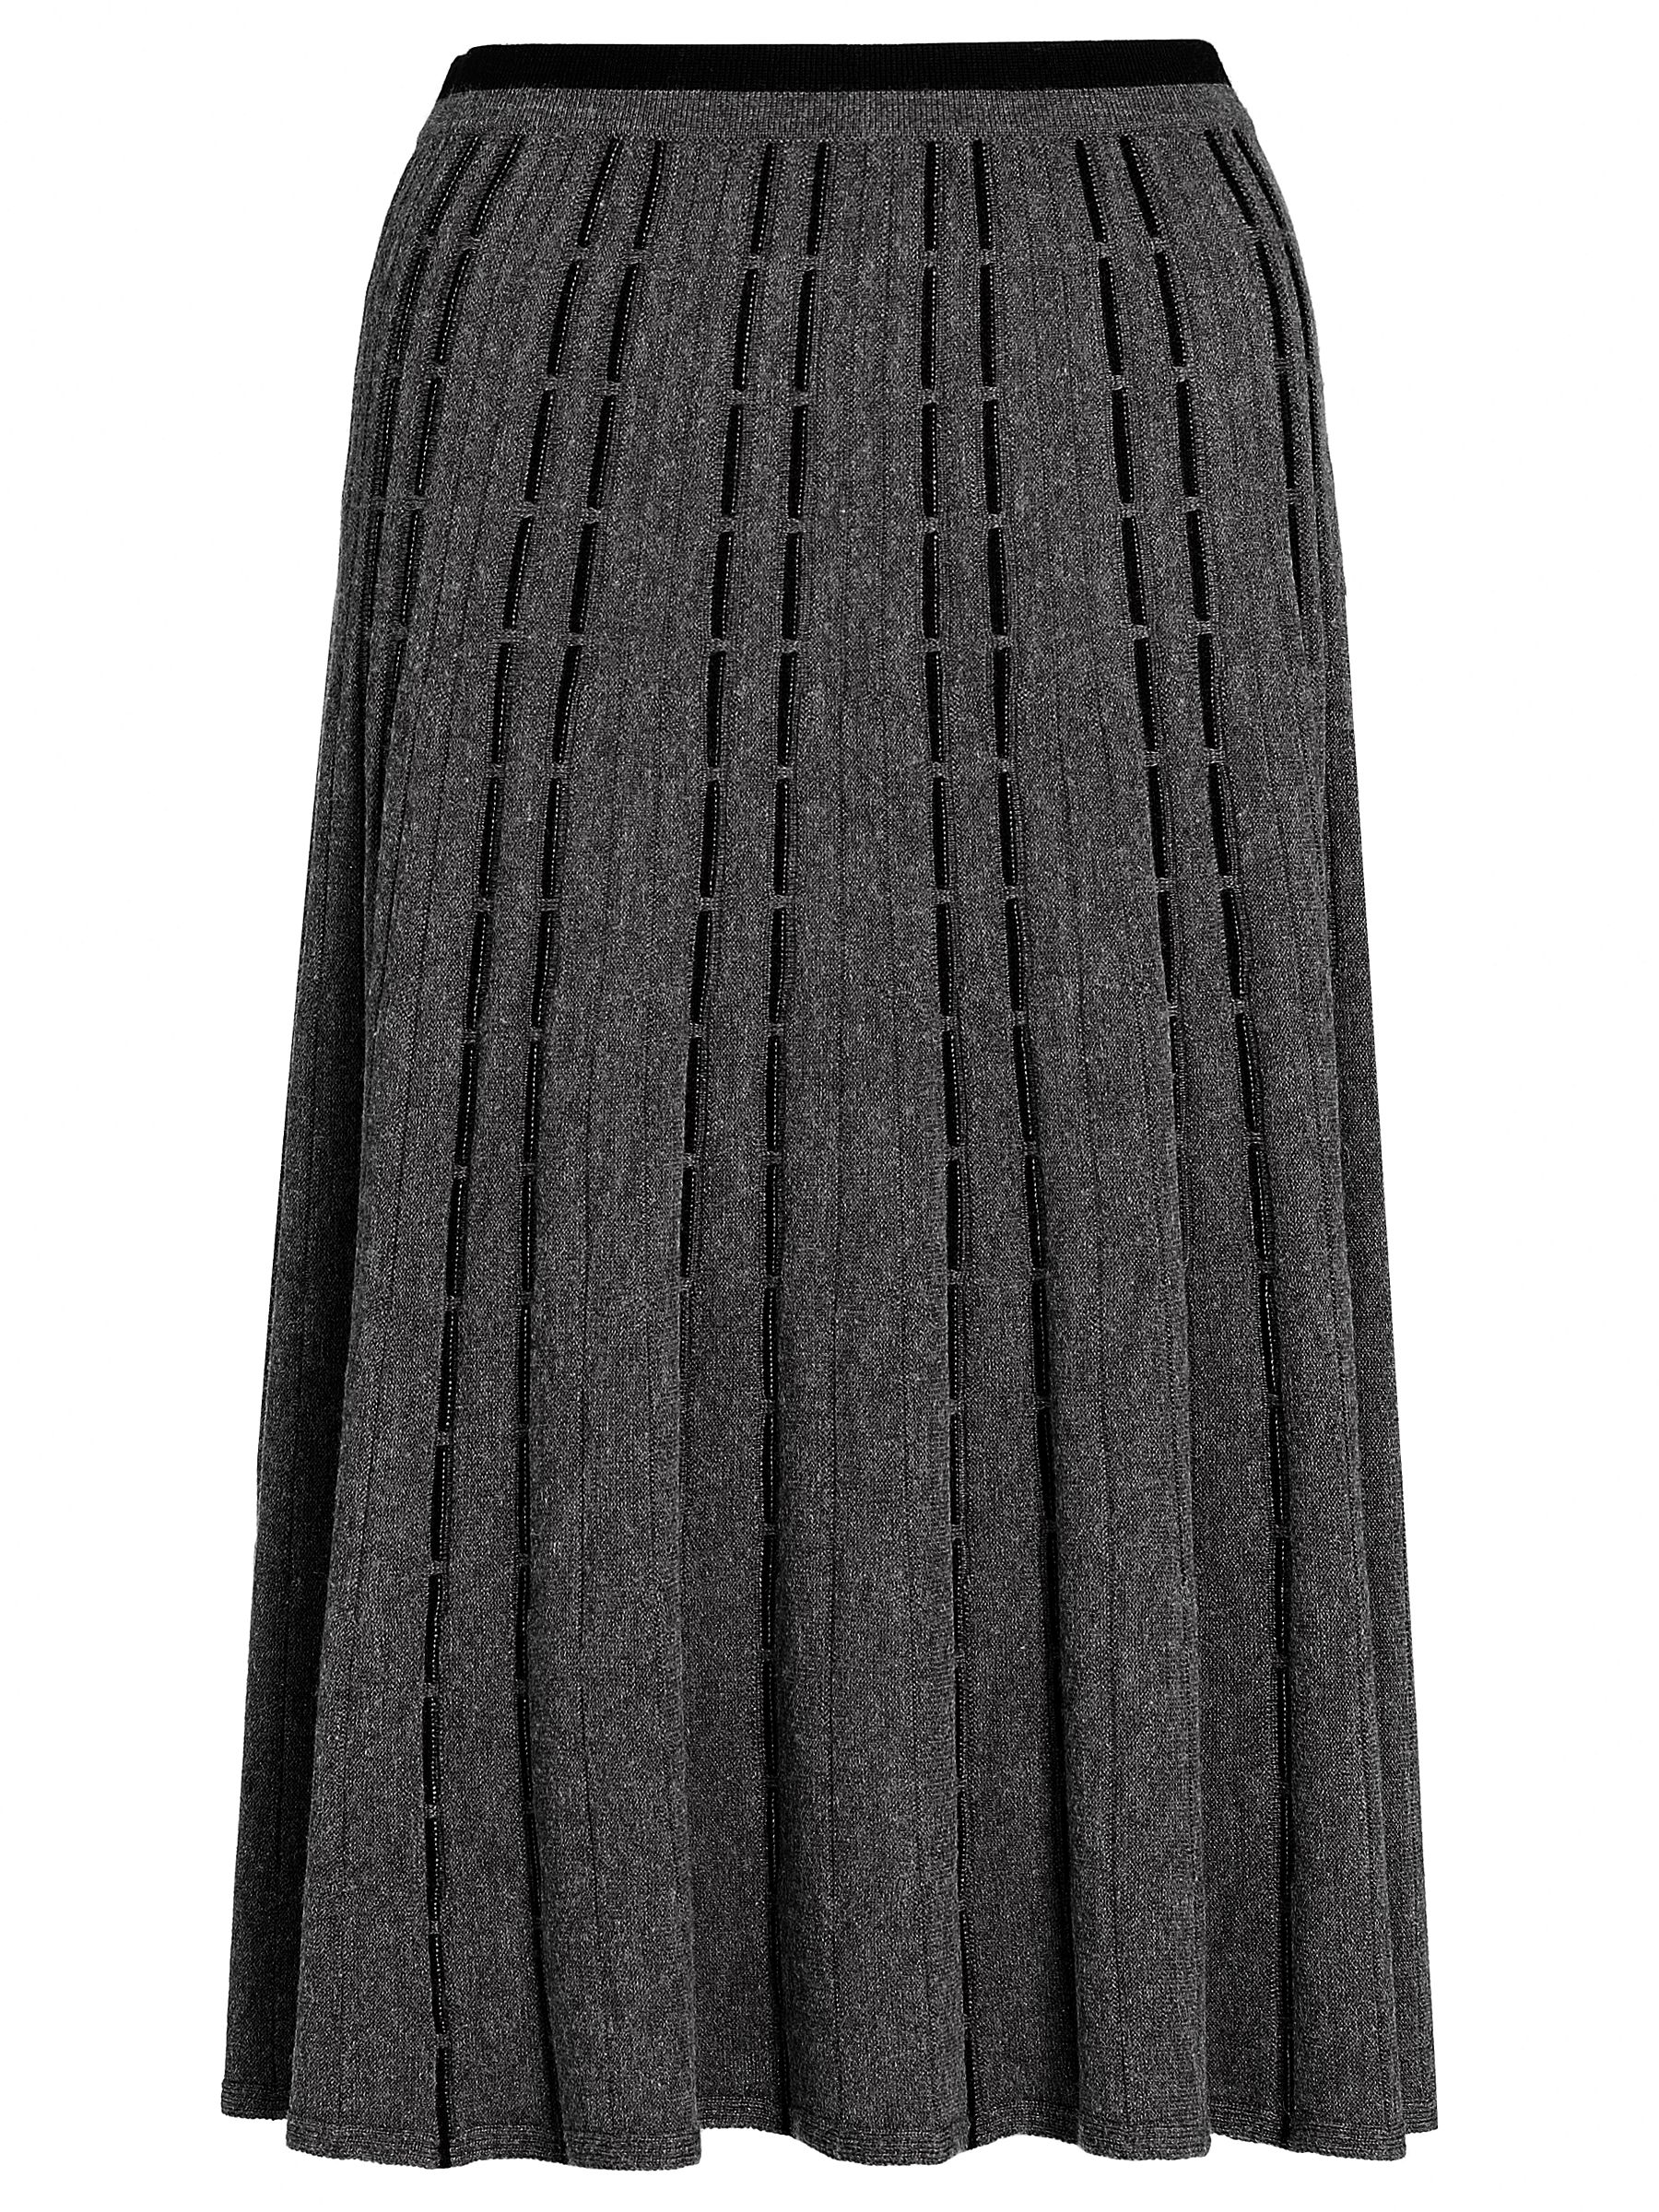 Buy John Lewis Contrast Knit Skirt, Grey online at JohnLewis 